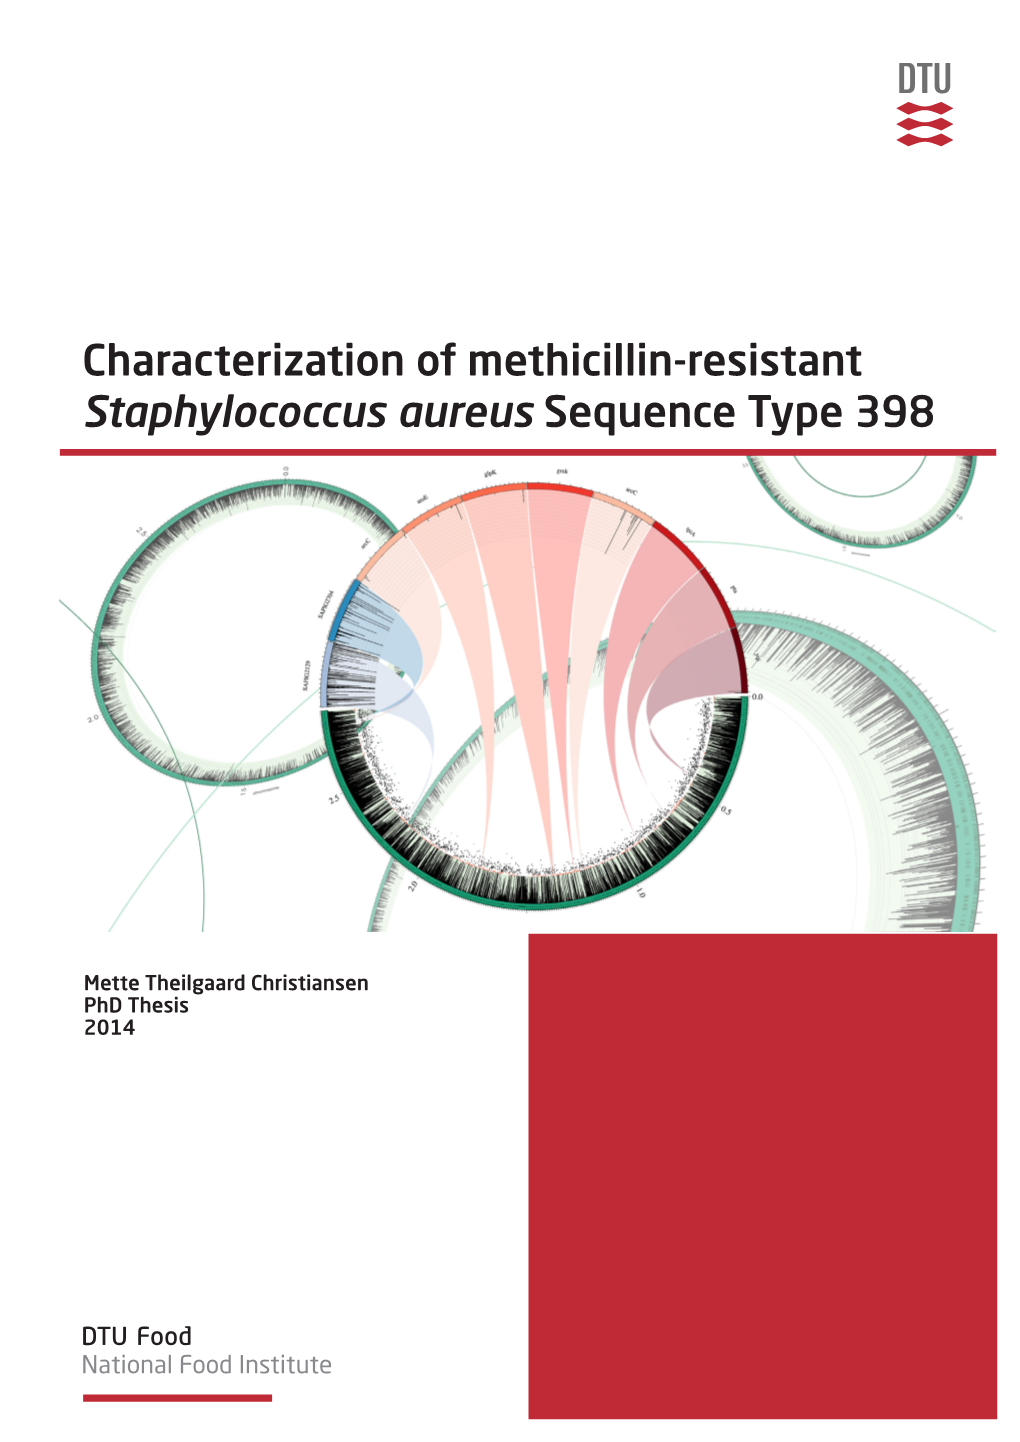 Characterization of Methicillin-Resistant Staphylococcus Aureus Sequence Type 398